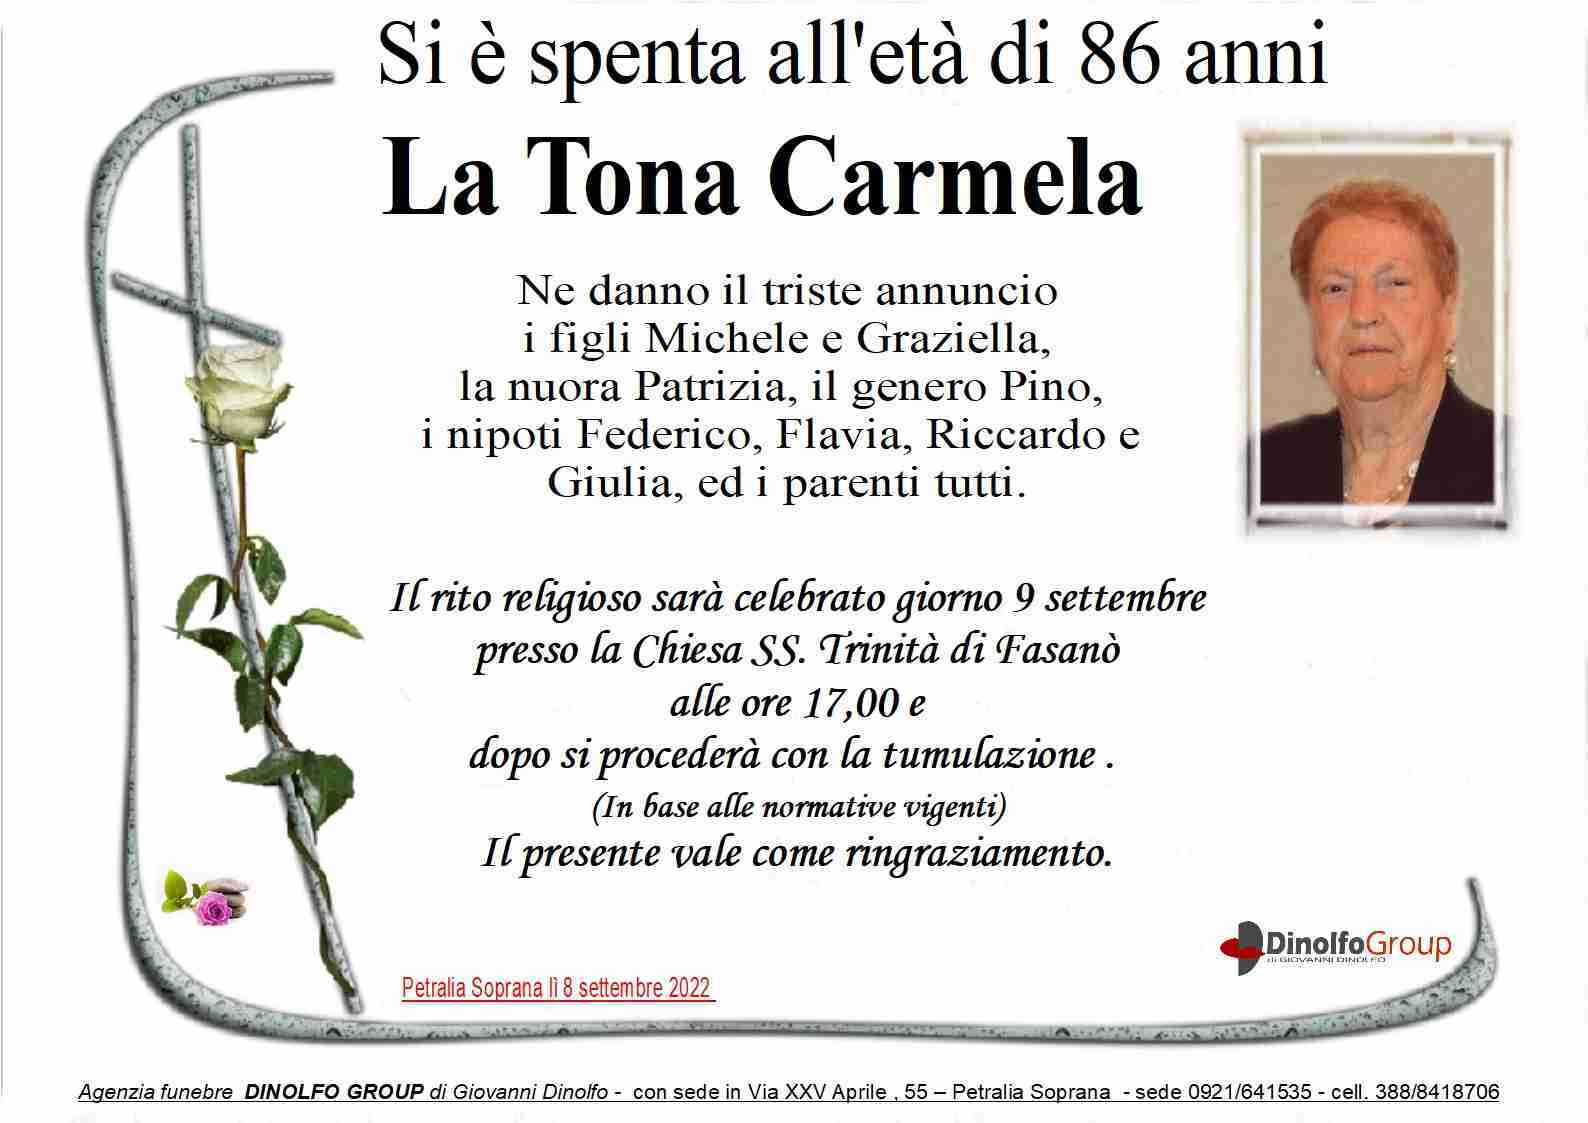 Carmela La Tona